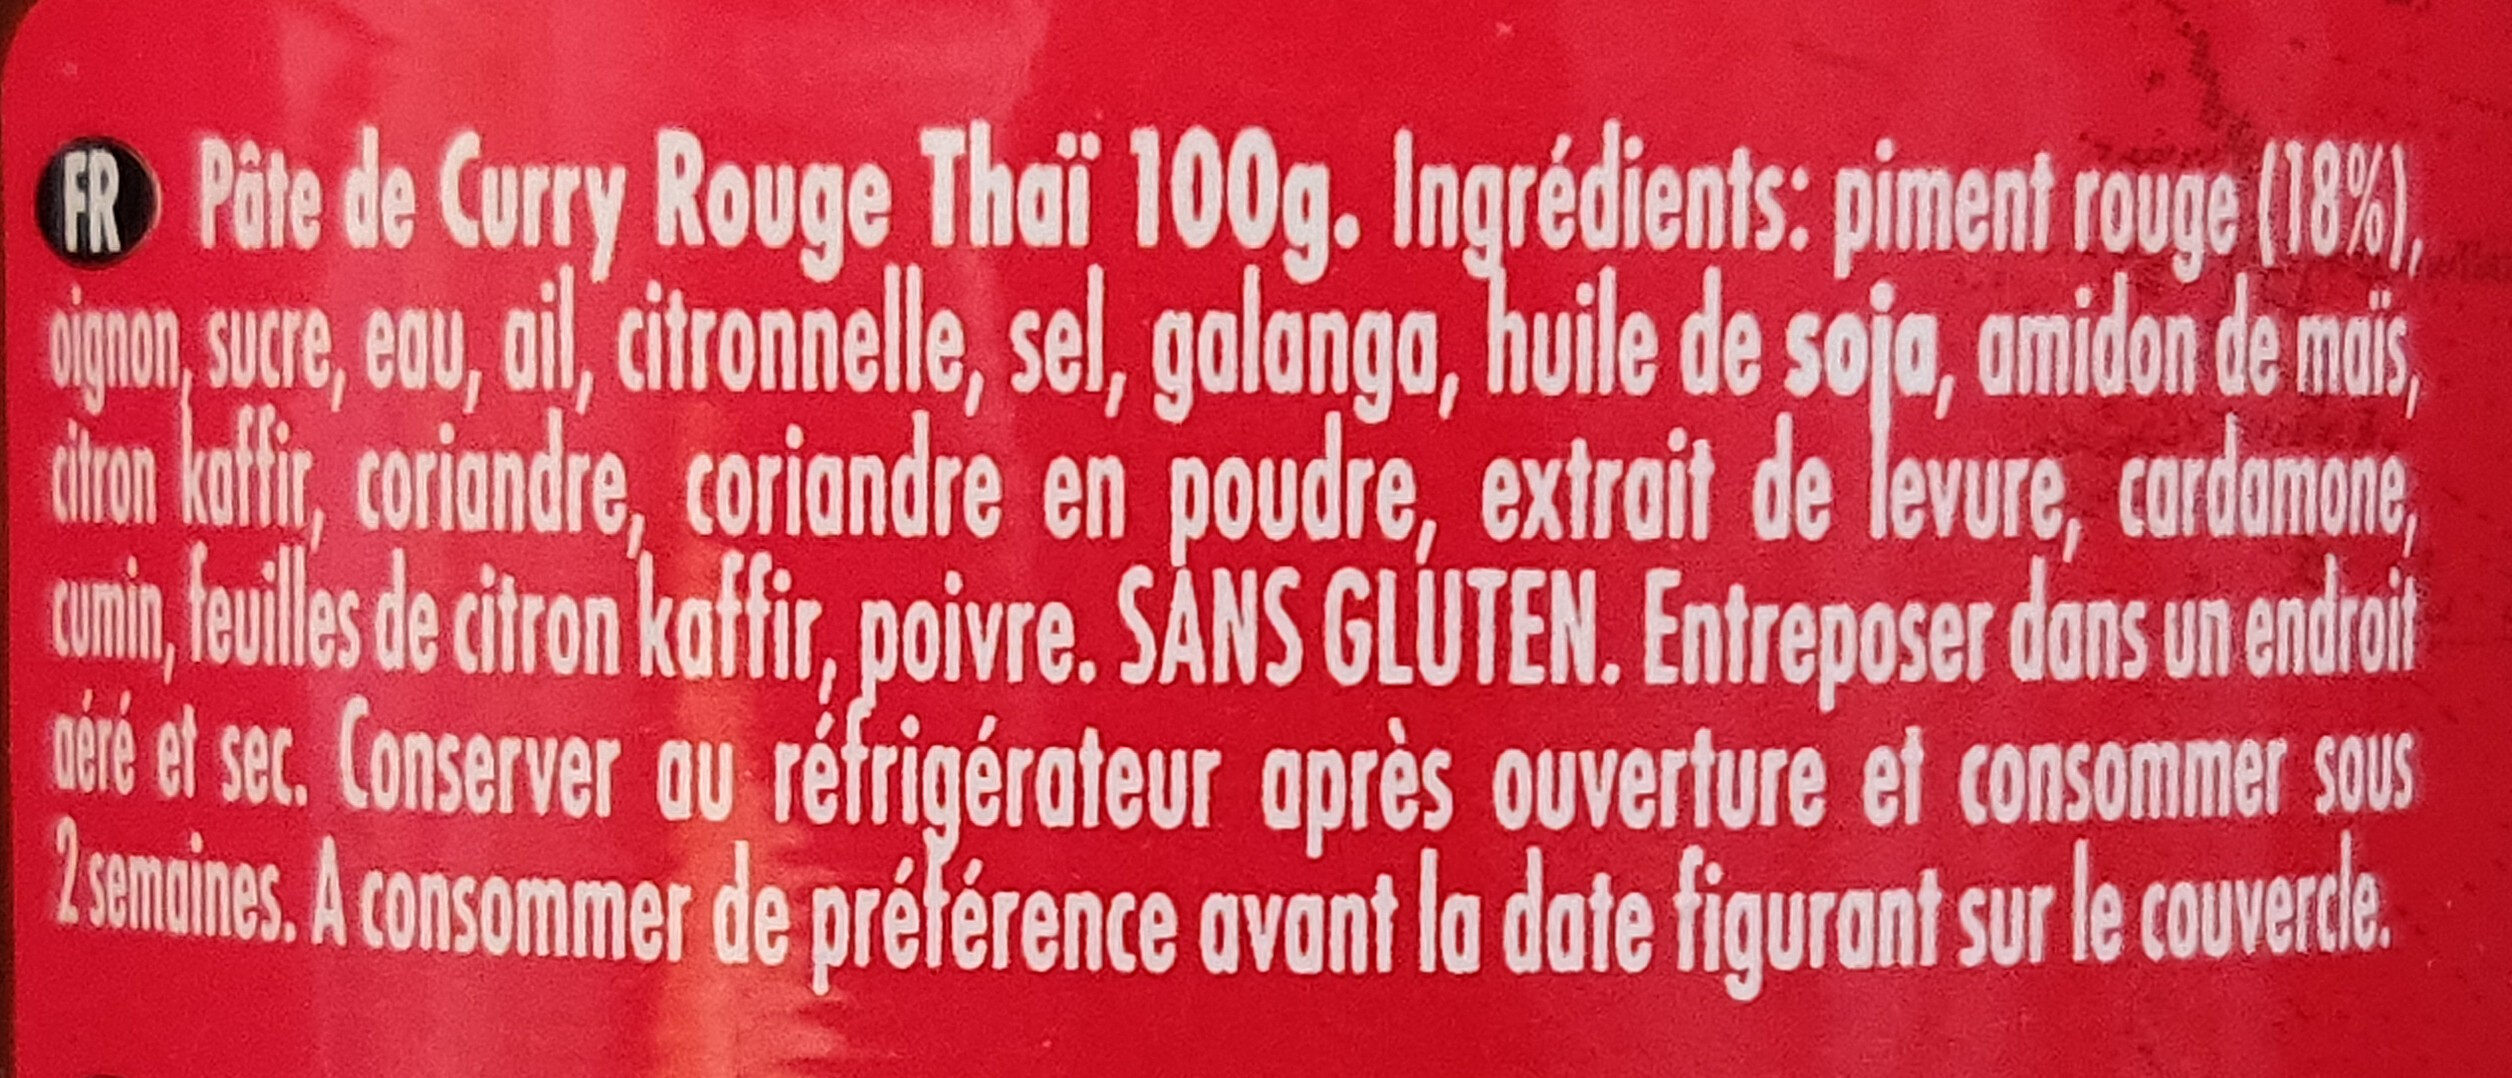 Pâte de curry rouge - Ingrediënten - fr